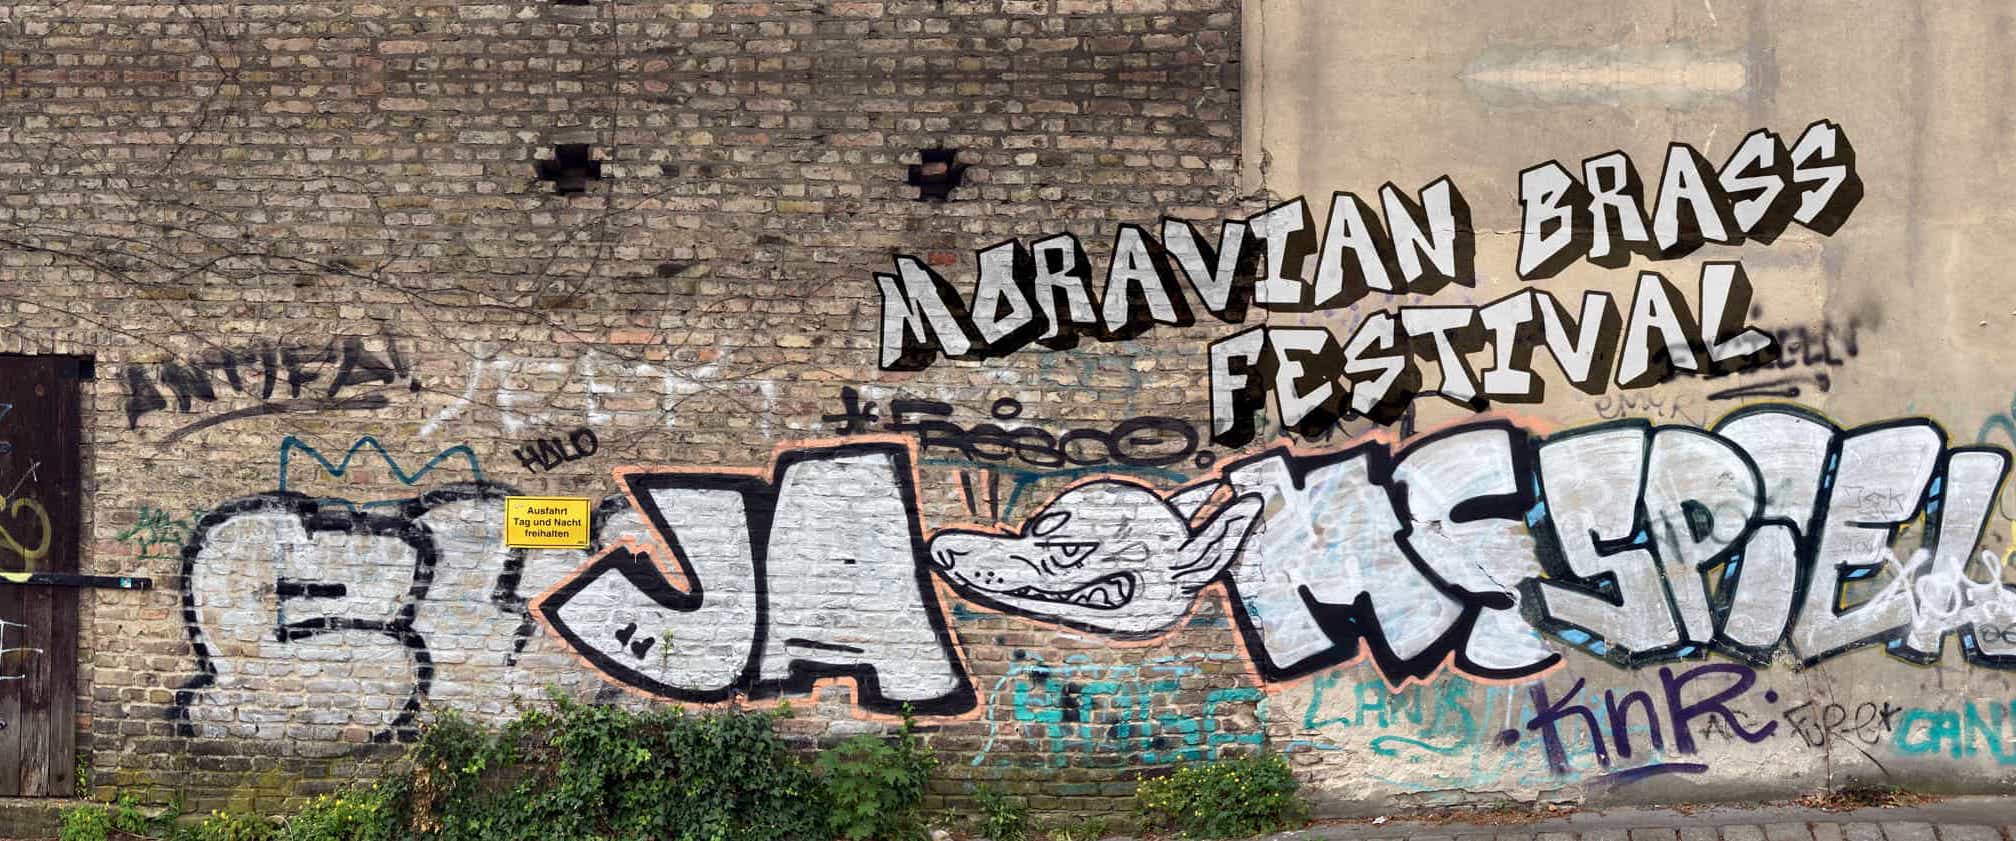 Graffiti im Herrnhuter Weg mit der Schrift 'Moravian Brass Festival'